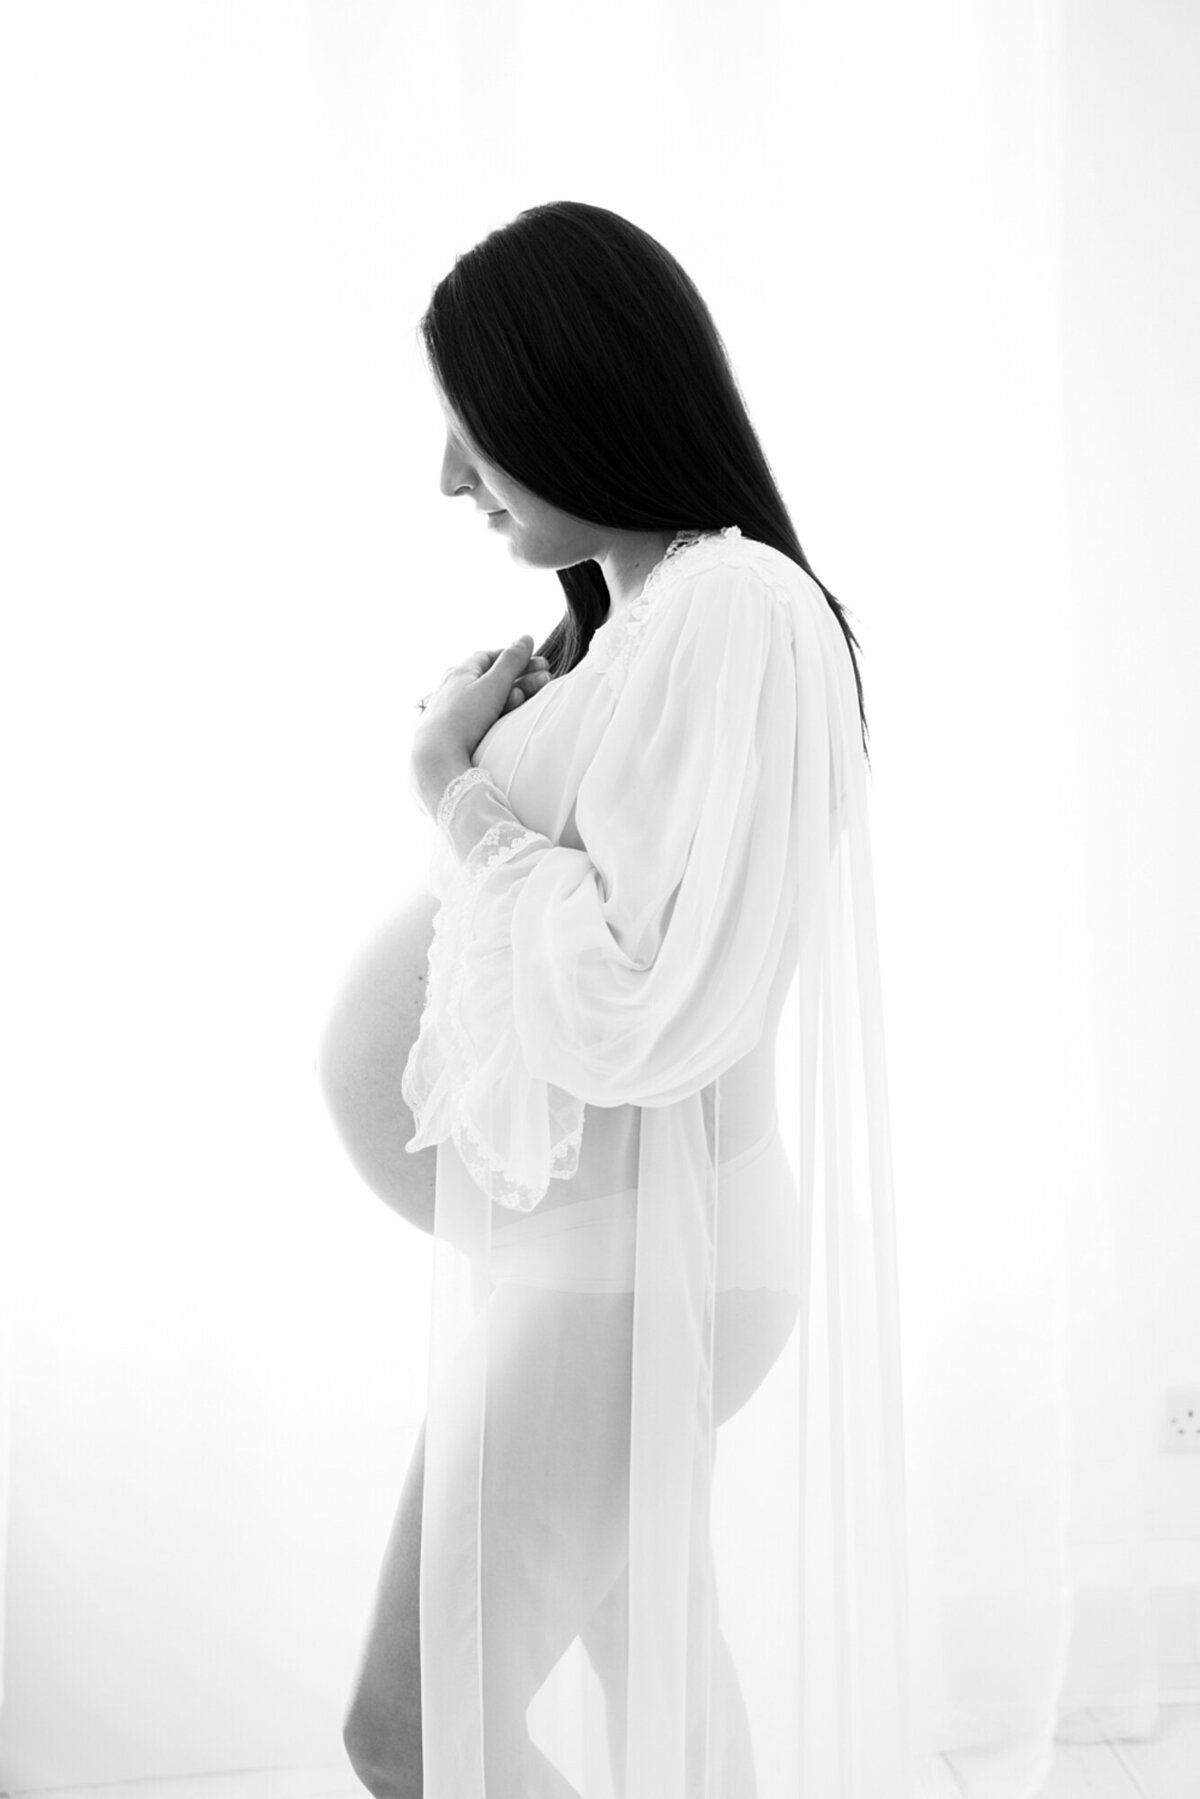 moments-photography-blackrock-south-county-dublin-best-unique-authentic-maternity-pregnancy-photos-0576 1